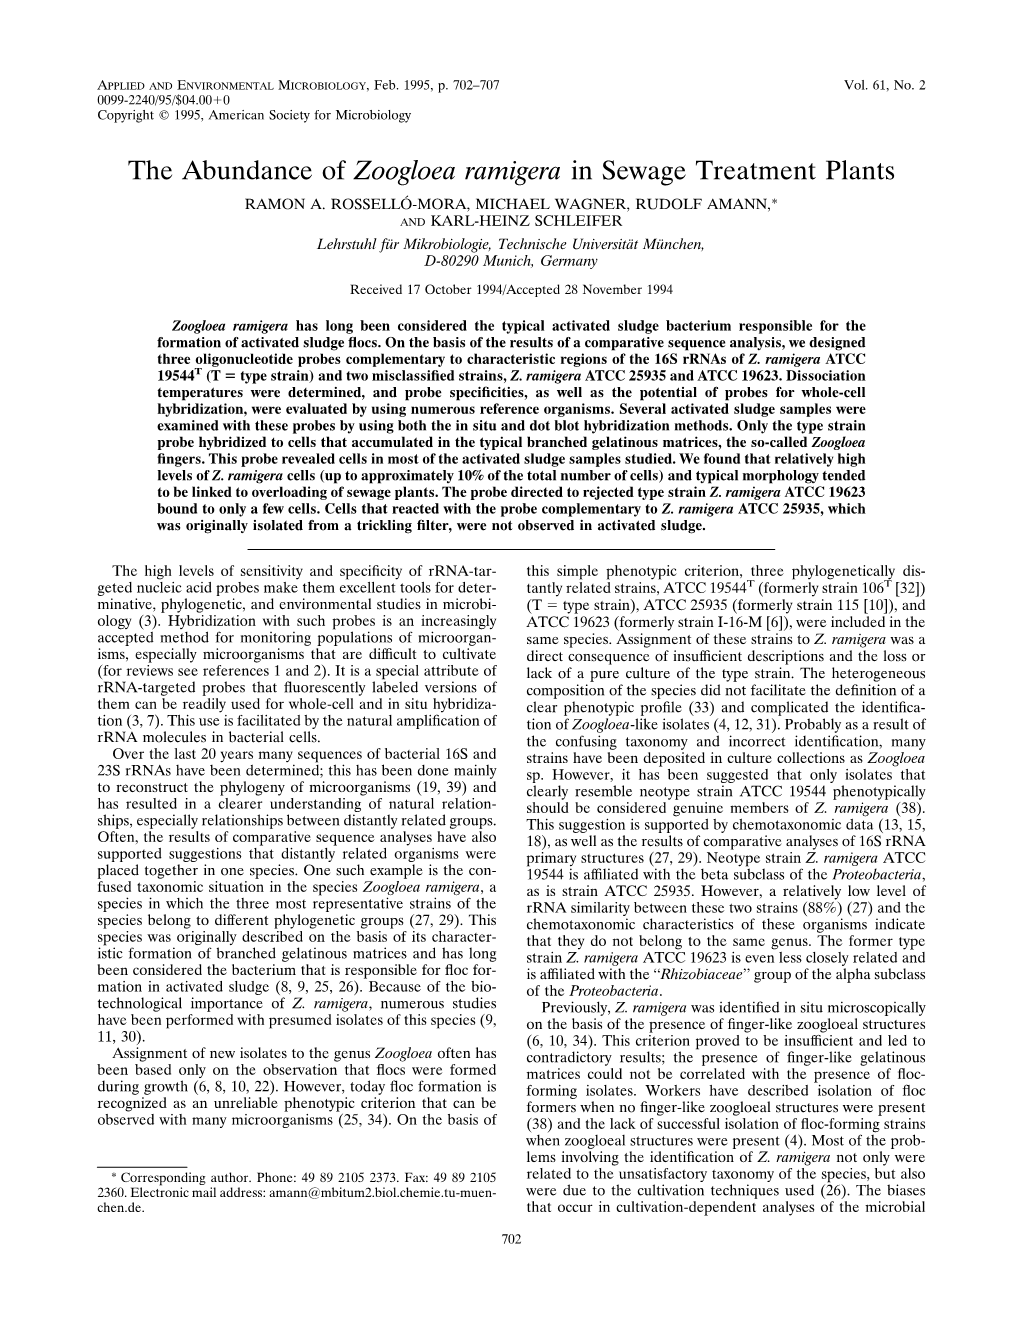 The Abundance of Zoogloea Ramigera in Sewage Treatment Plants RAMON A